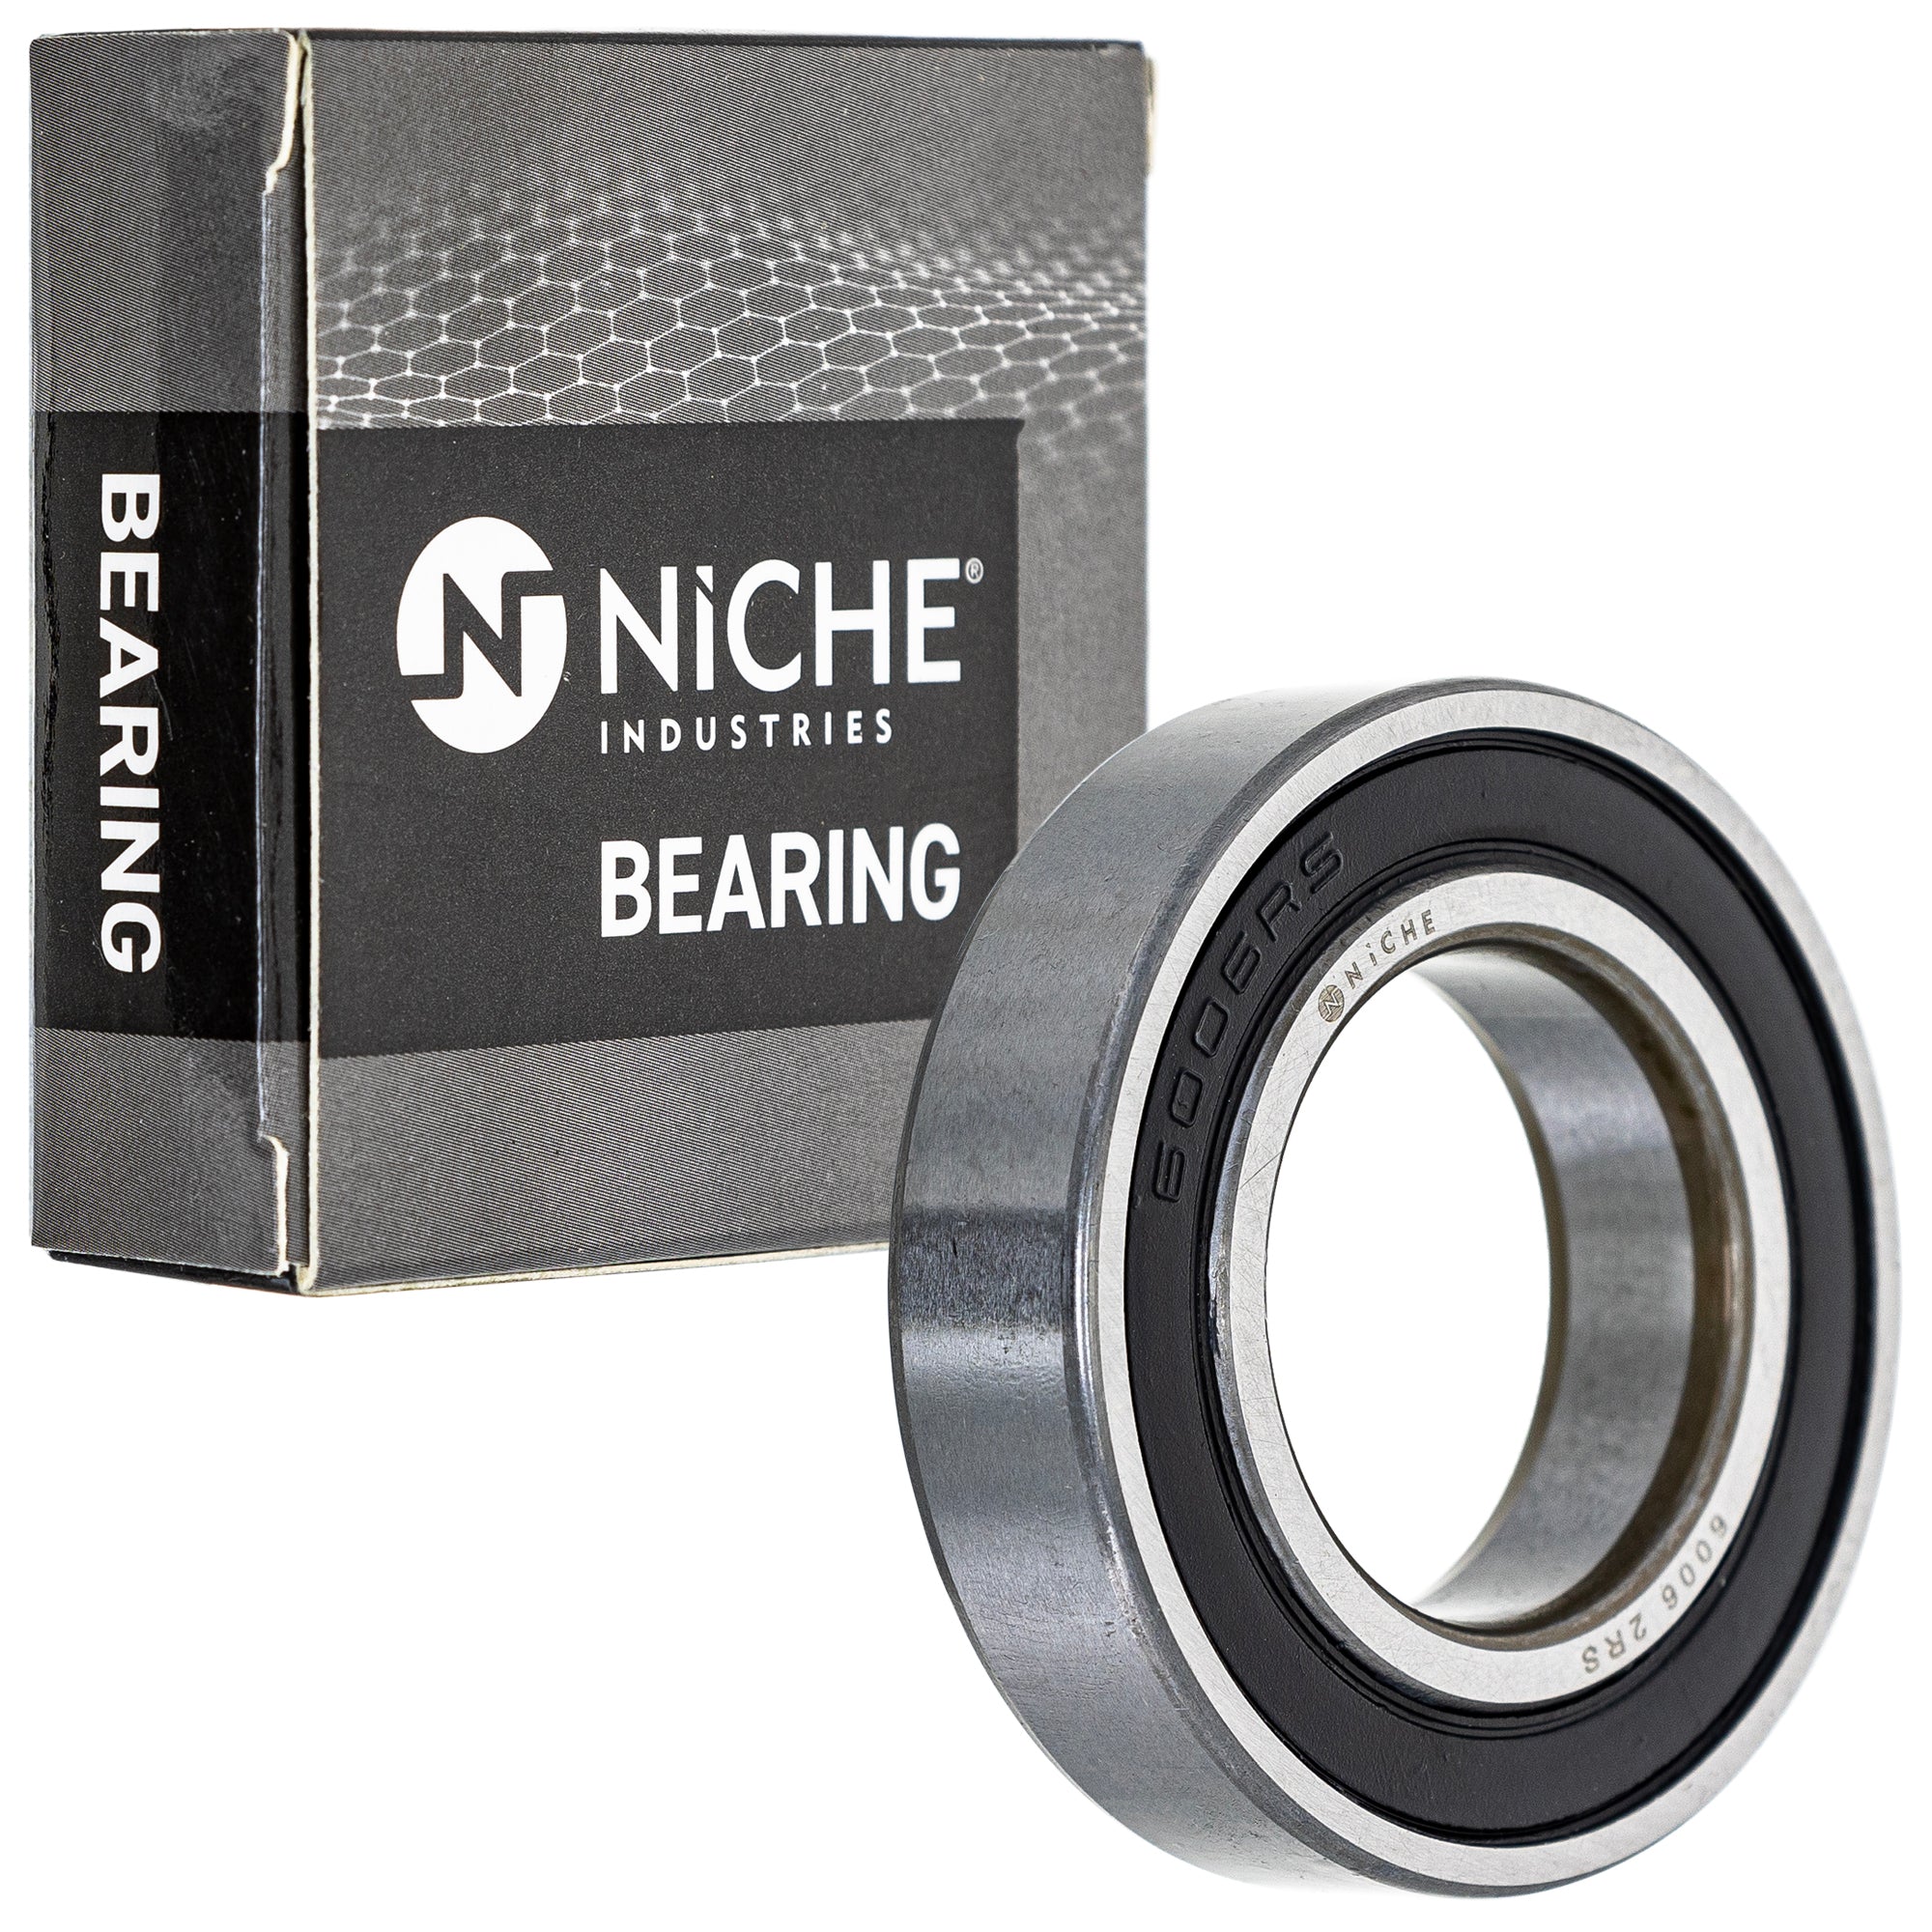 NICHE 519-CBB2224R Bearing & Seal Kit 10-Pack for zOTHER Polaris